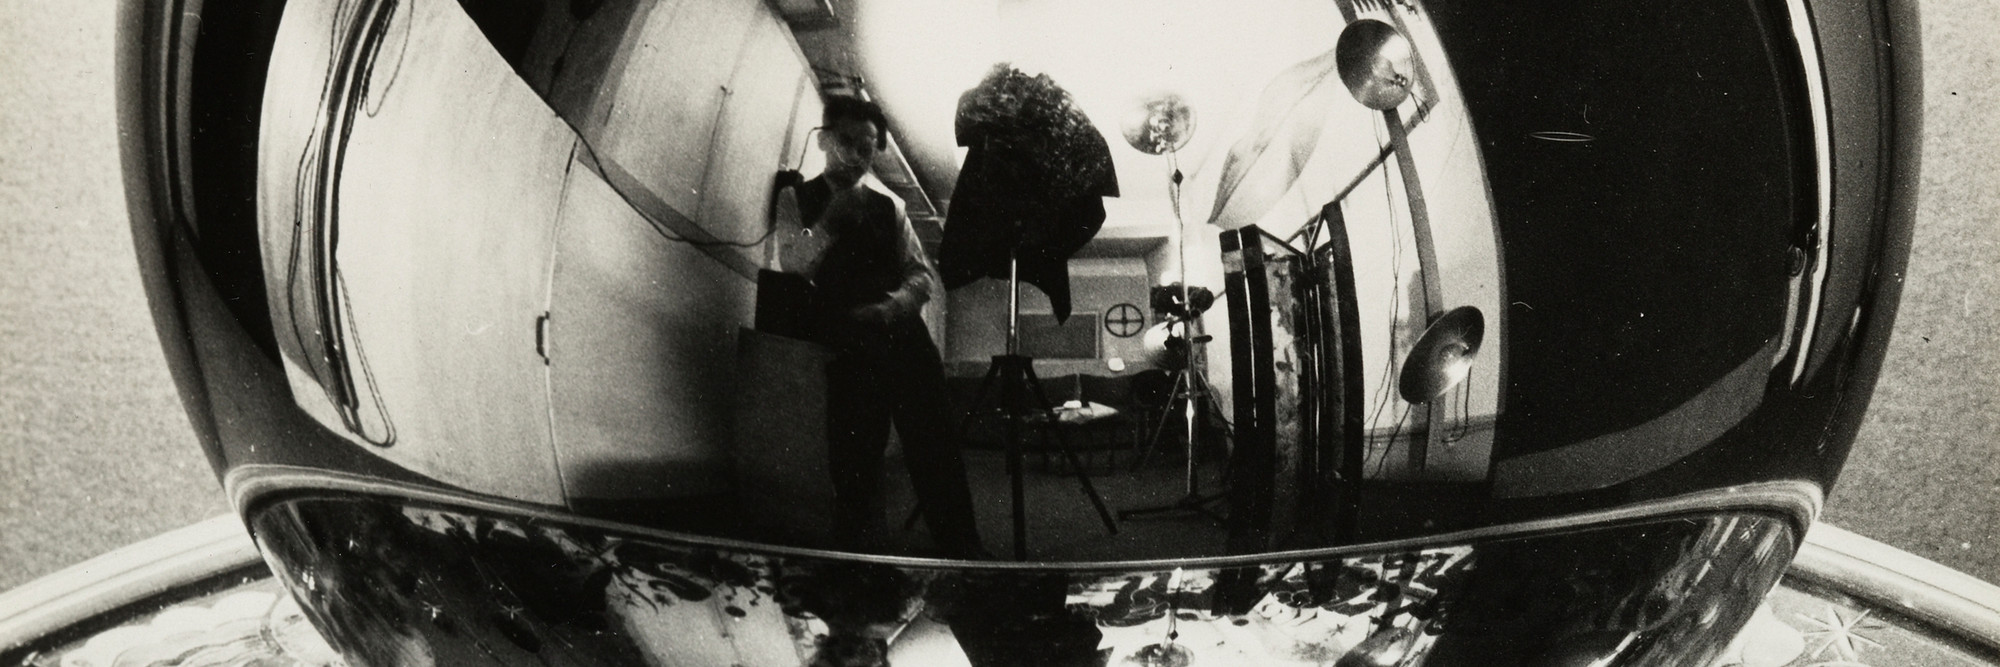 Man Ray. Laboratory of the Future. 1935. Gelatin silver print, 9 1/16 × 7″ (23.1 × 17.8 cm). The Museum of Modern Art, New York. Gift of James Johnson Sweeney © 2013 Man Ray Trust / Artists Rights Society (ARS), New York / ADAGP, Paris